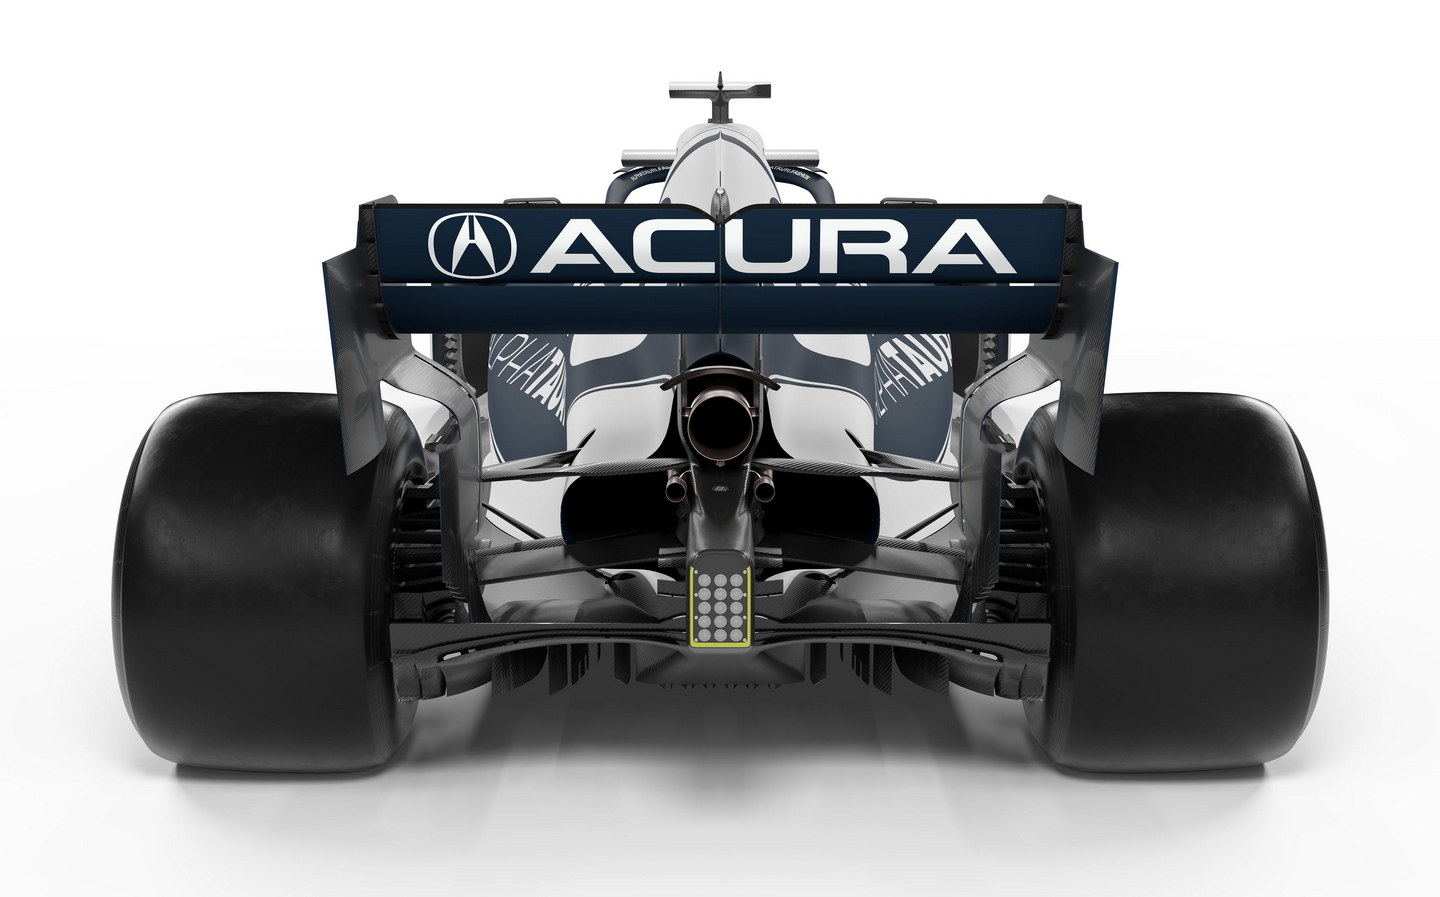 Acura branding appears on AlphaTauri racer for 2021 US GP